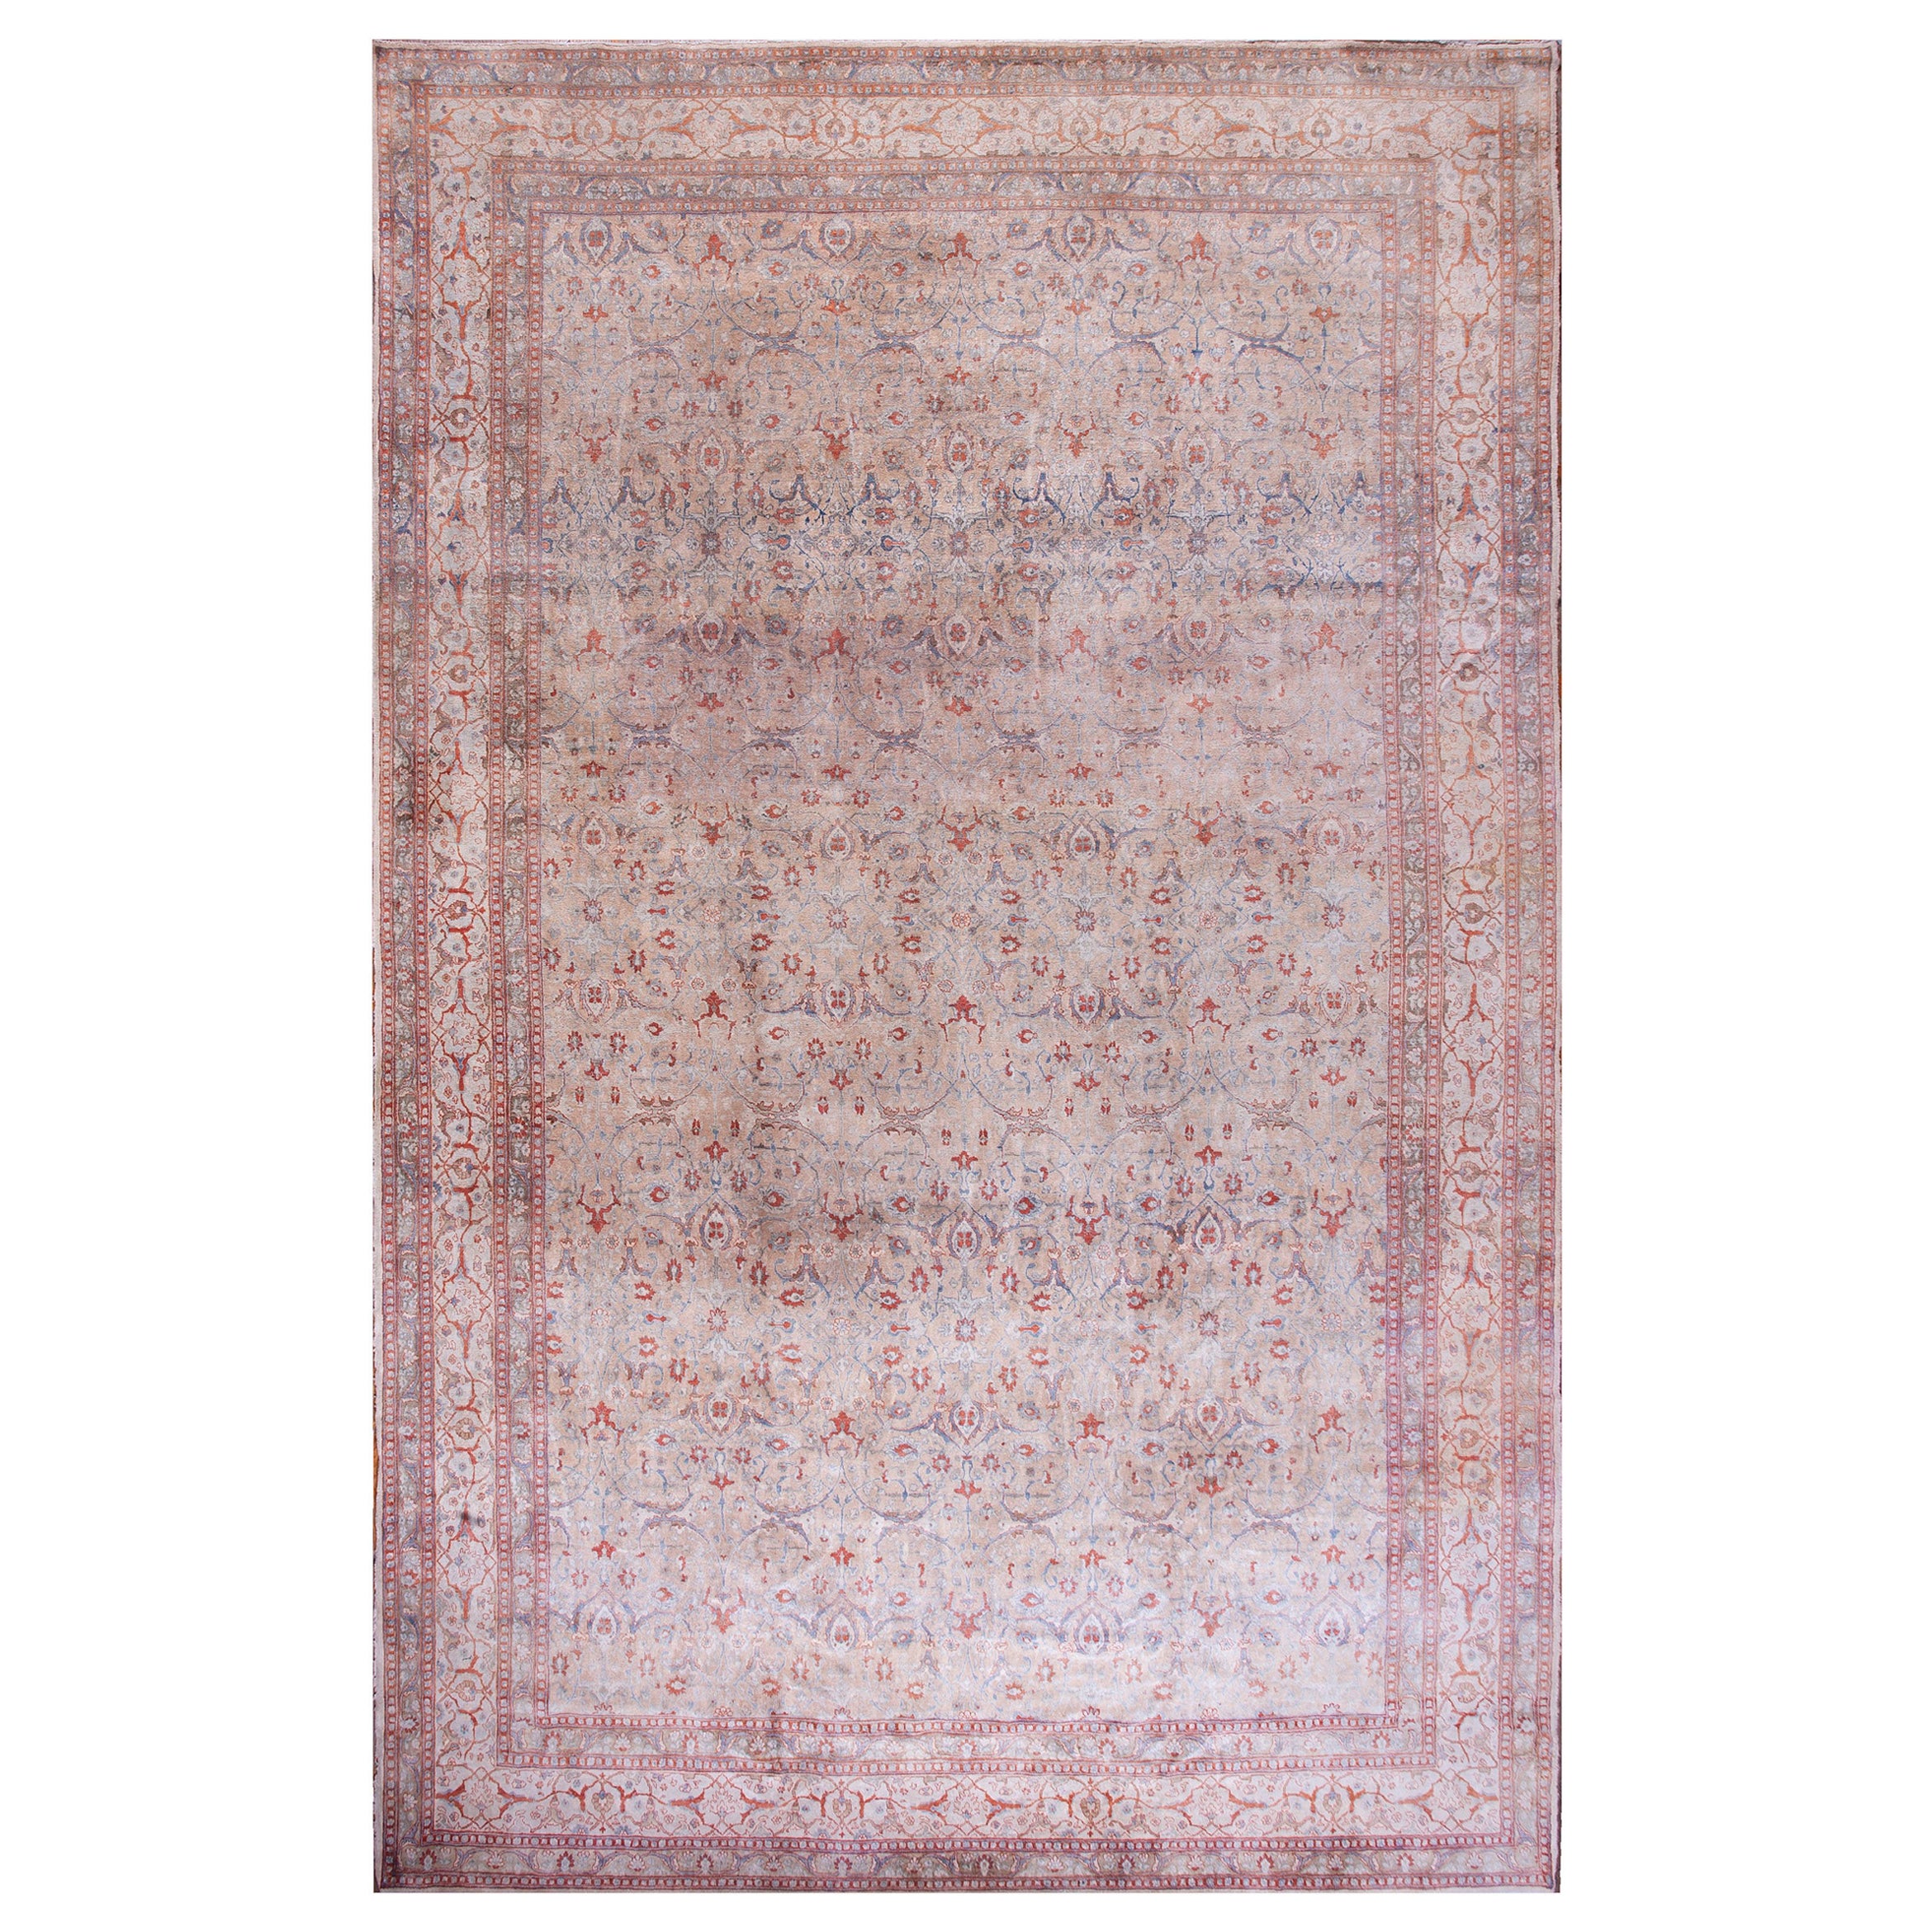 Late 19th Century Persian Tabriz Carpet ( 11'4" x 18'2" - 345 x 554 ) For Sale